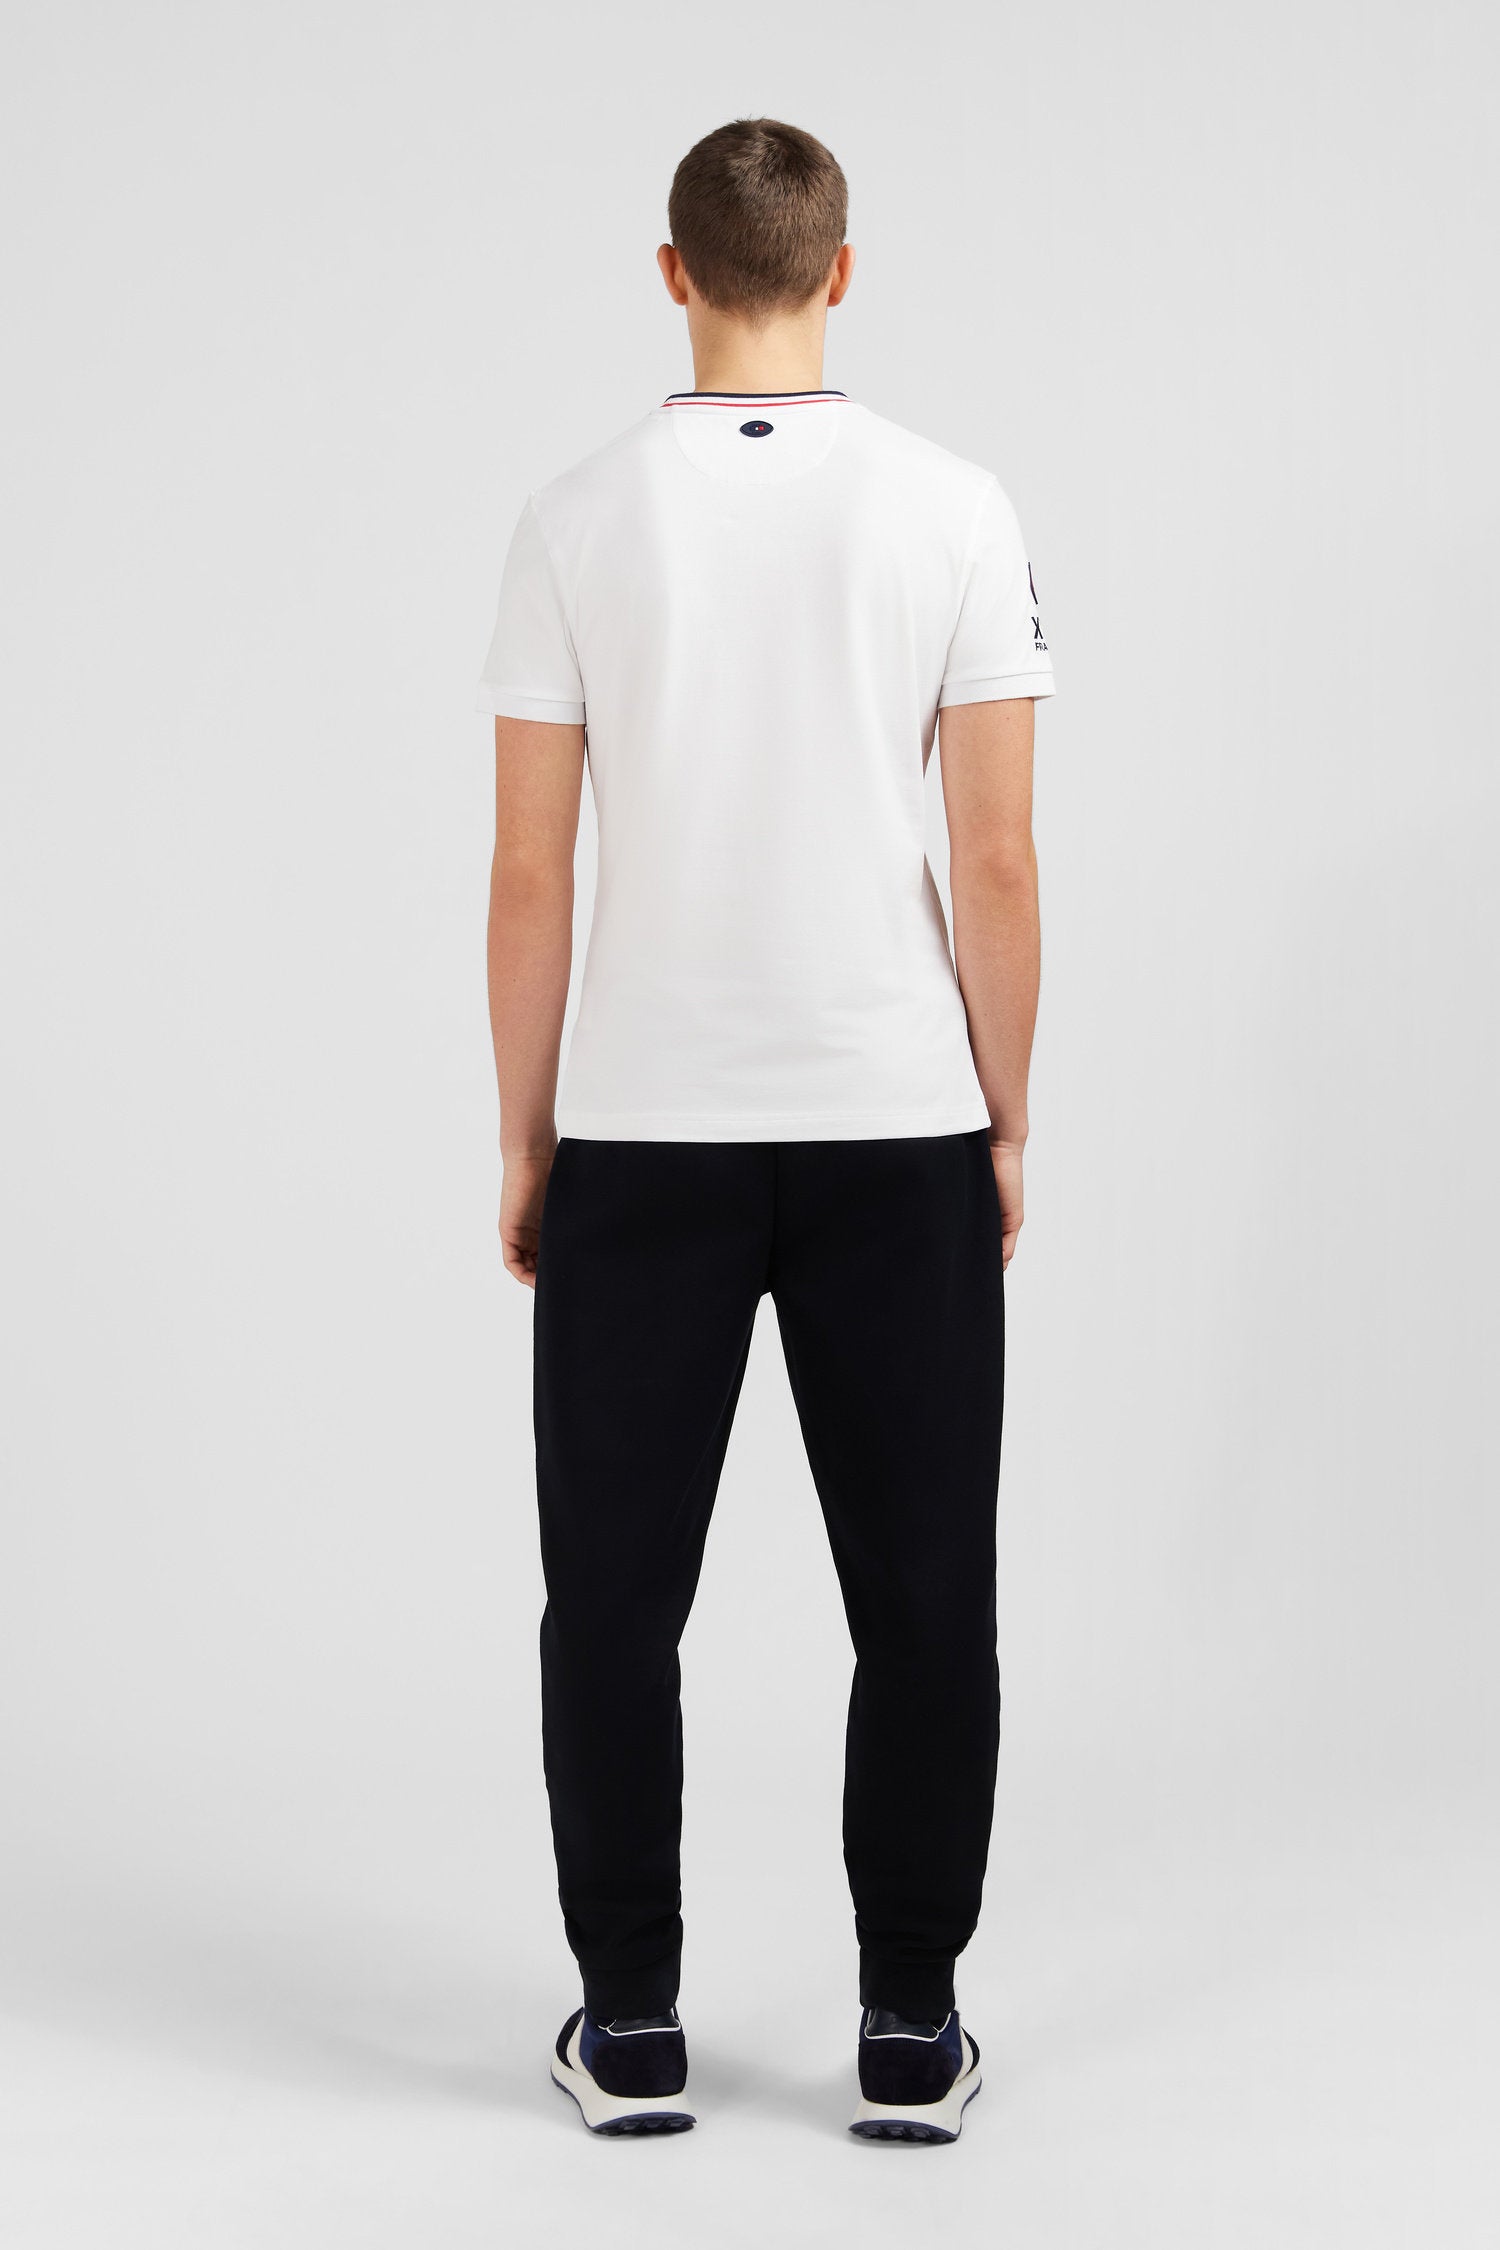 XV De France White Printed Short-Sleeved T-Shirt_E24MAITC0057_BC_03